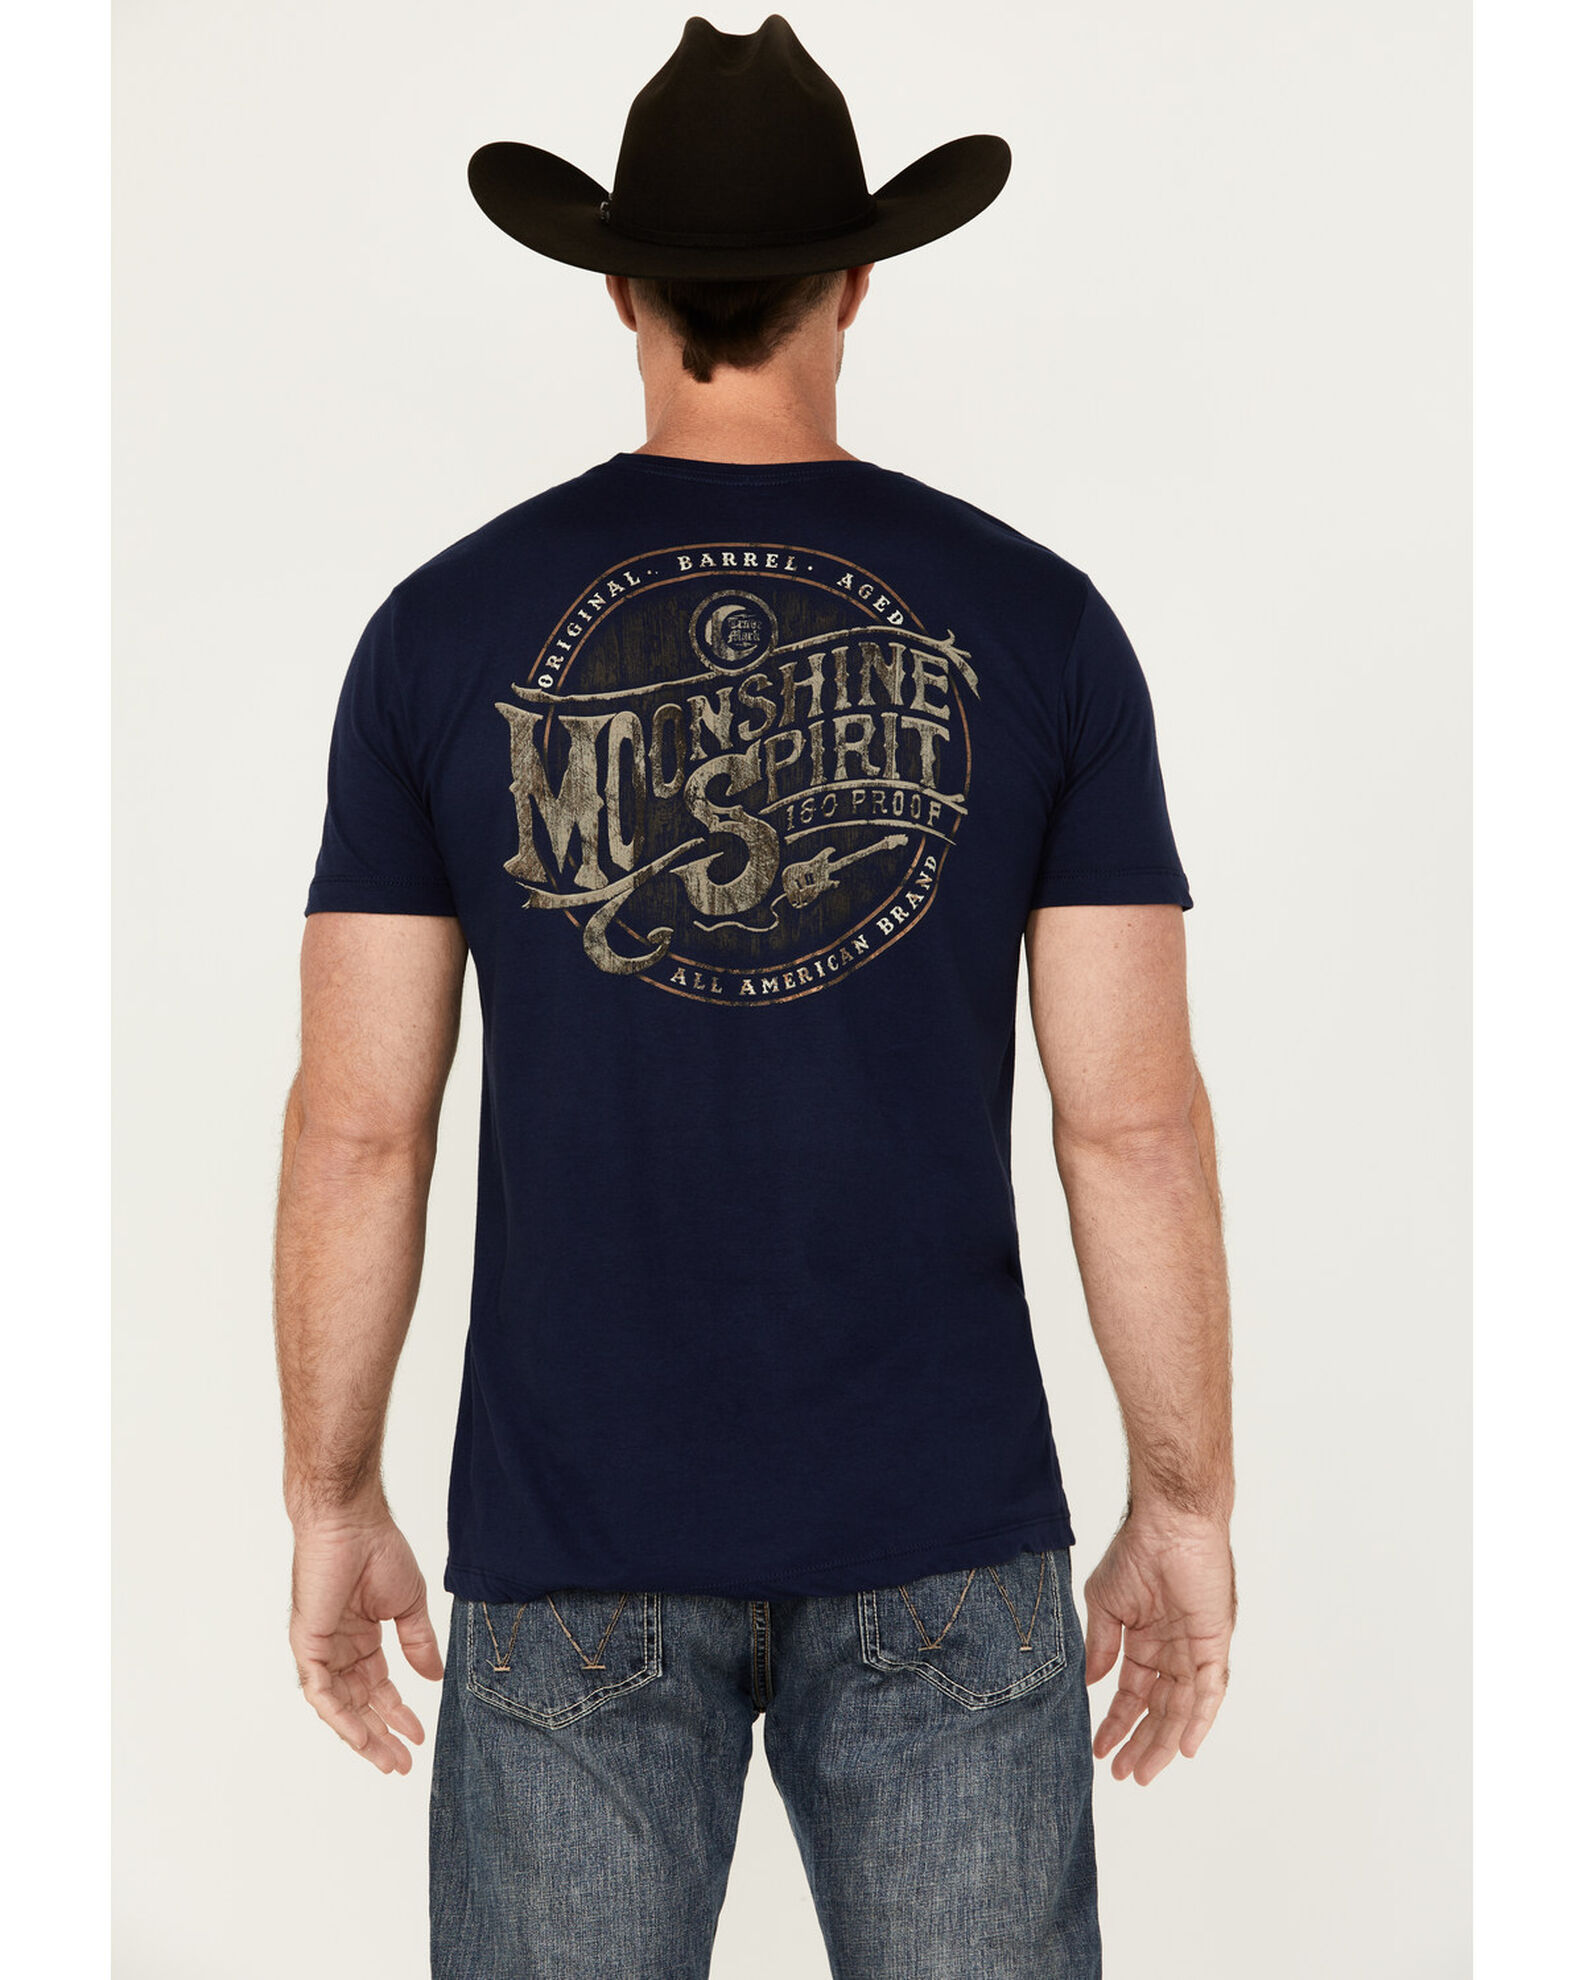 Moonshine Spirit Men's Oak Barrel Short Sleeve Graphic T-Shirt